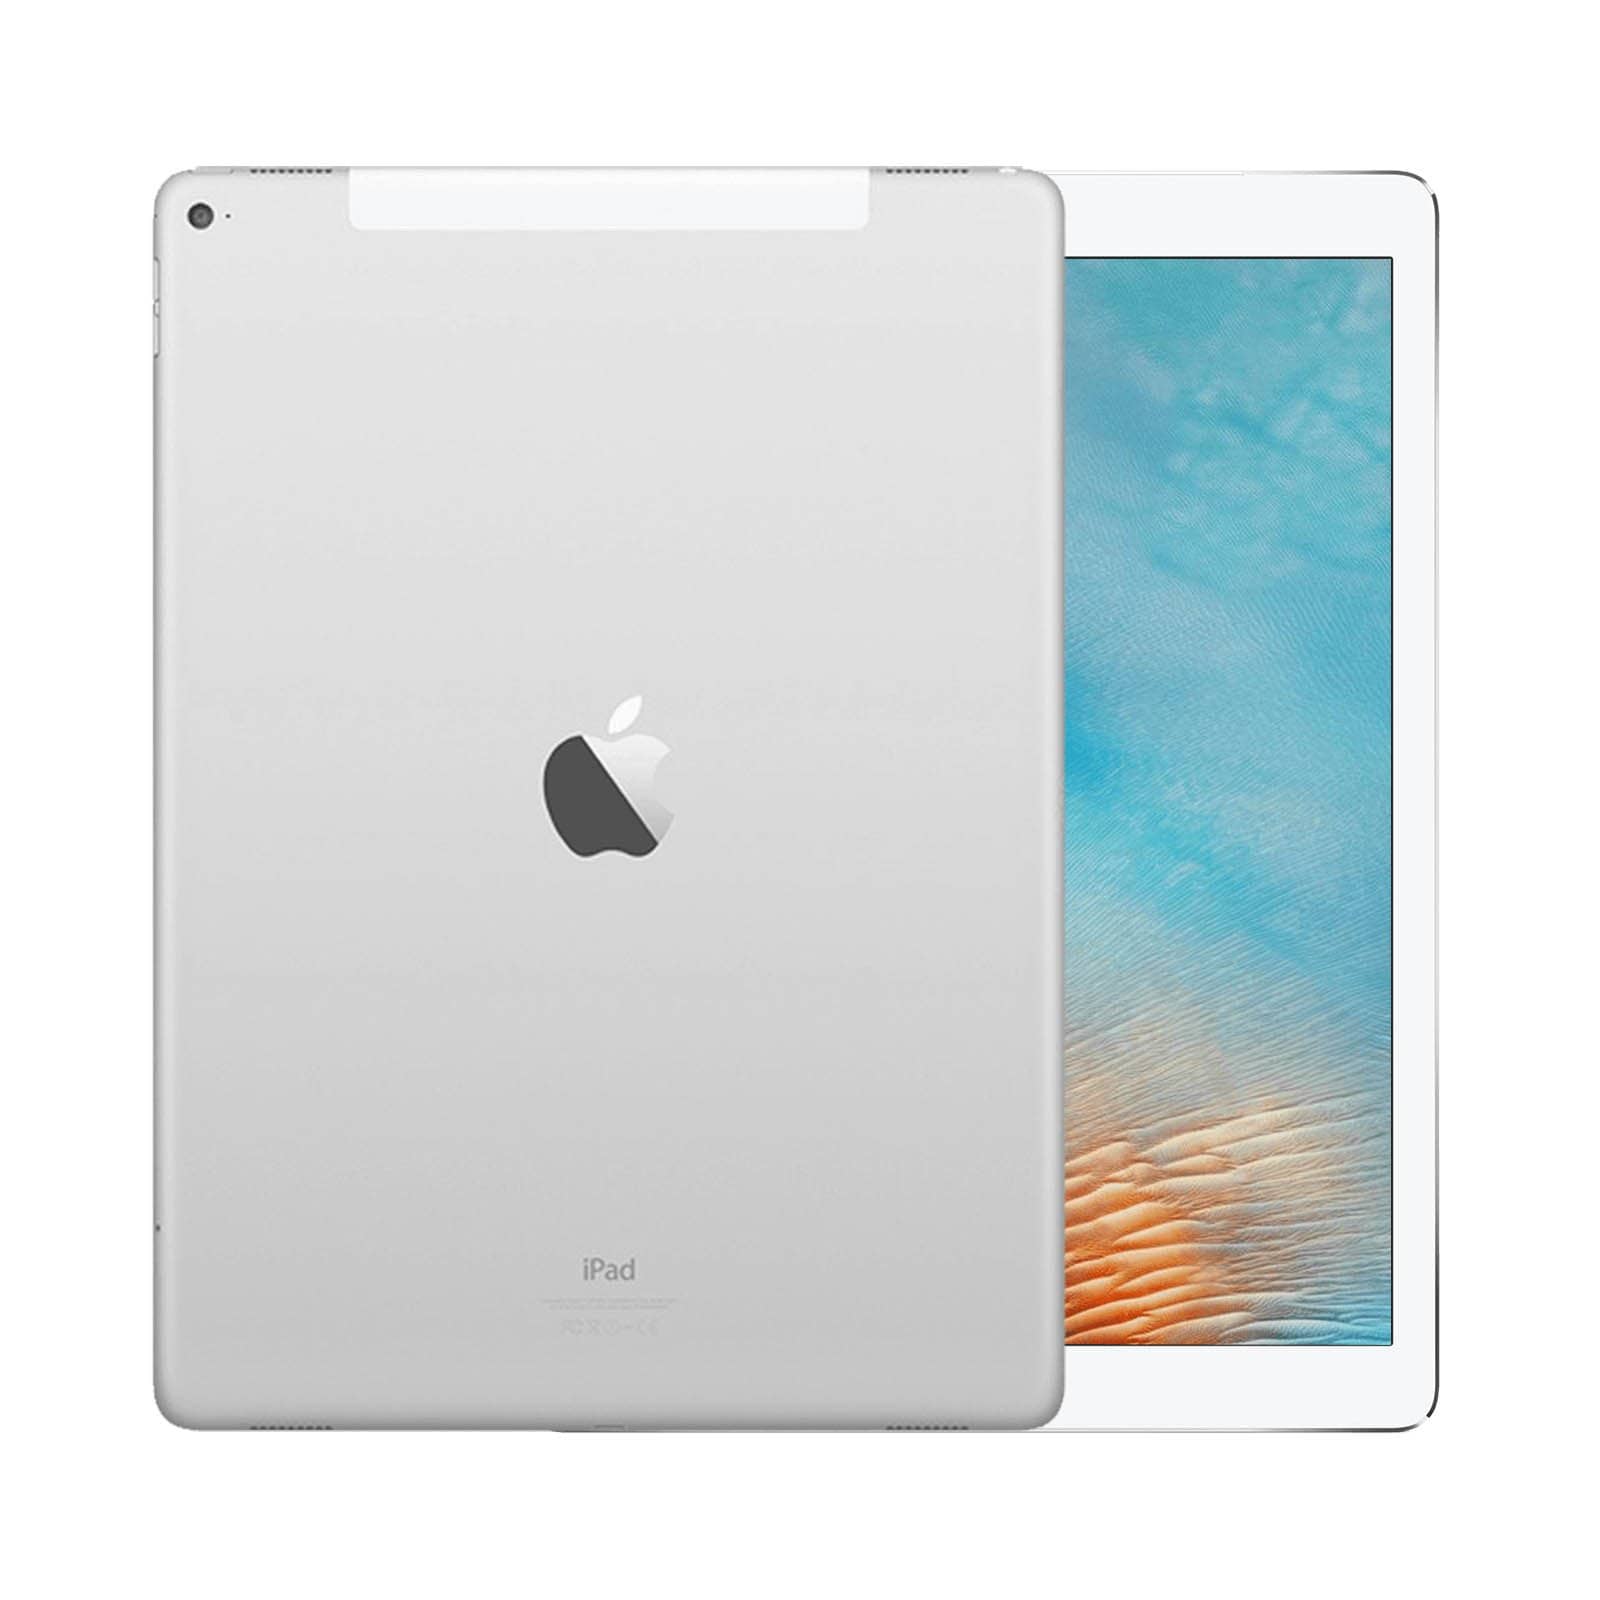 iPad Pro 12.9 Inch 2nd Gen 512GB Silver Very Good - Unlocked 512GB Silver Very Good